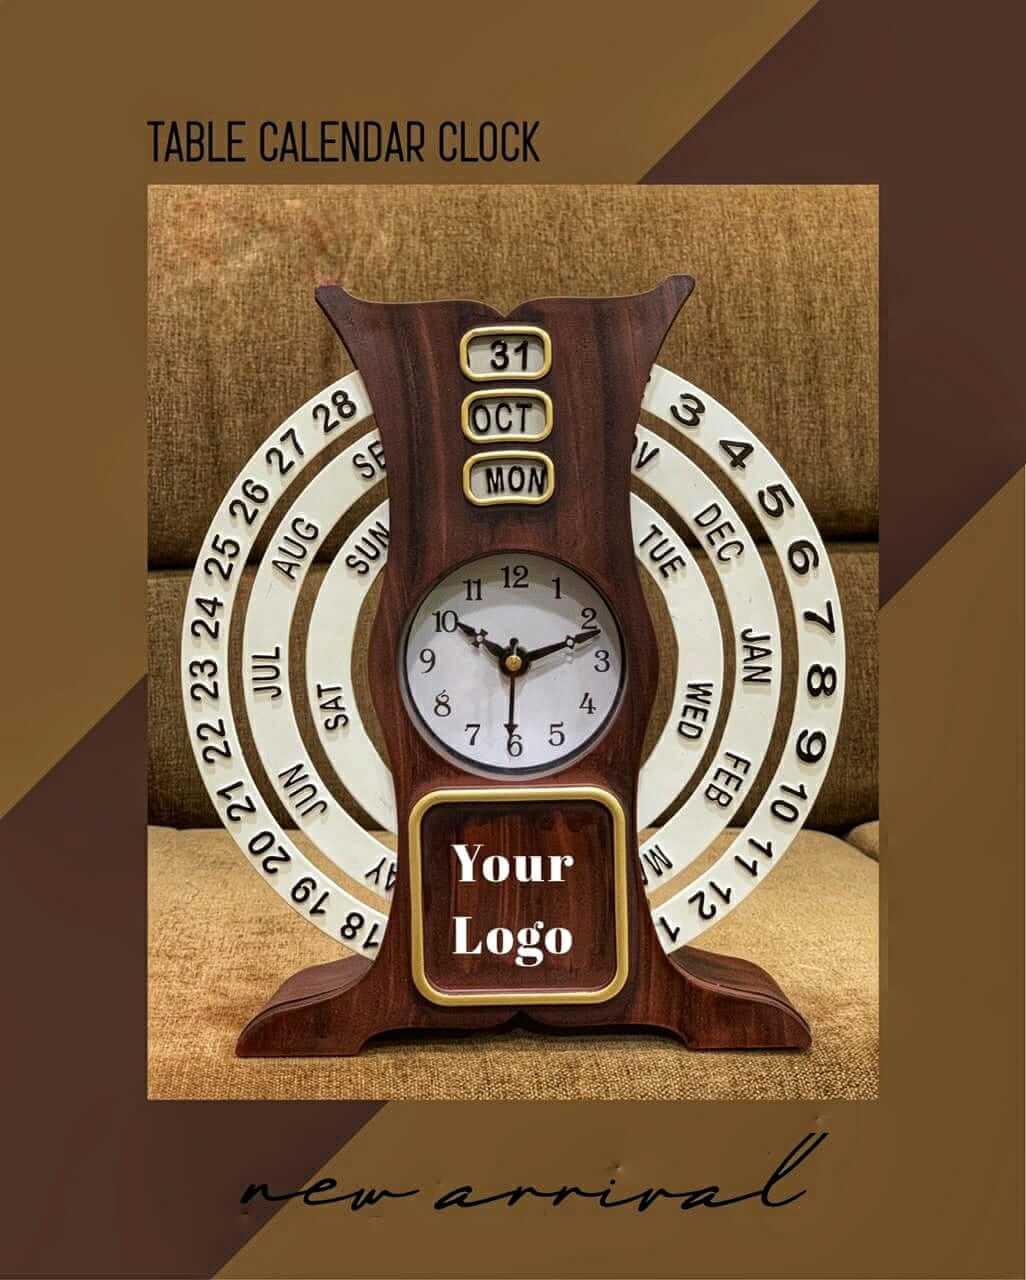 1632126120_Table-Calendar-Clock